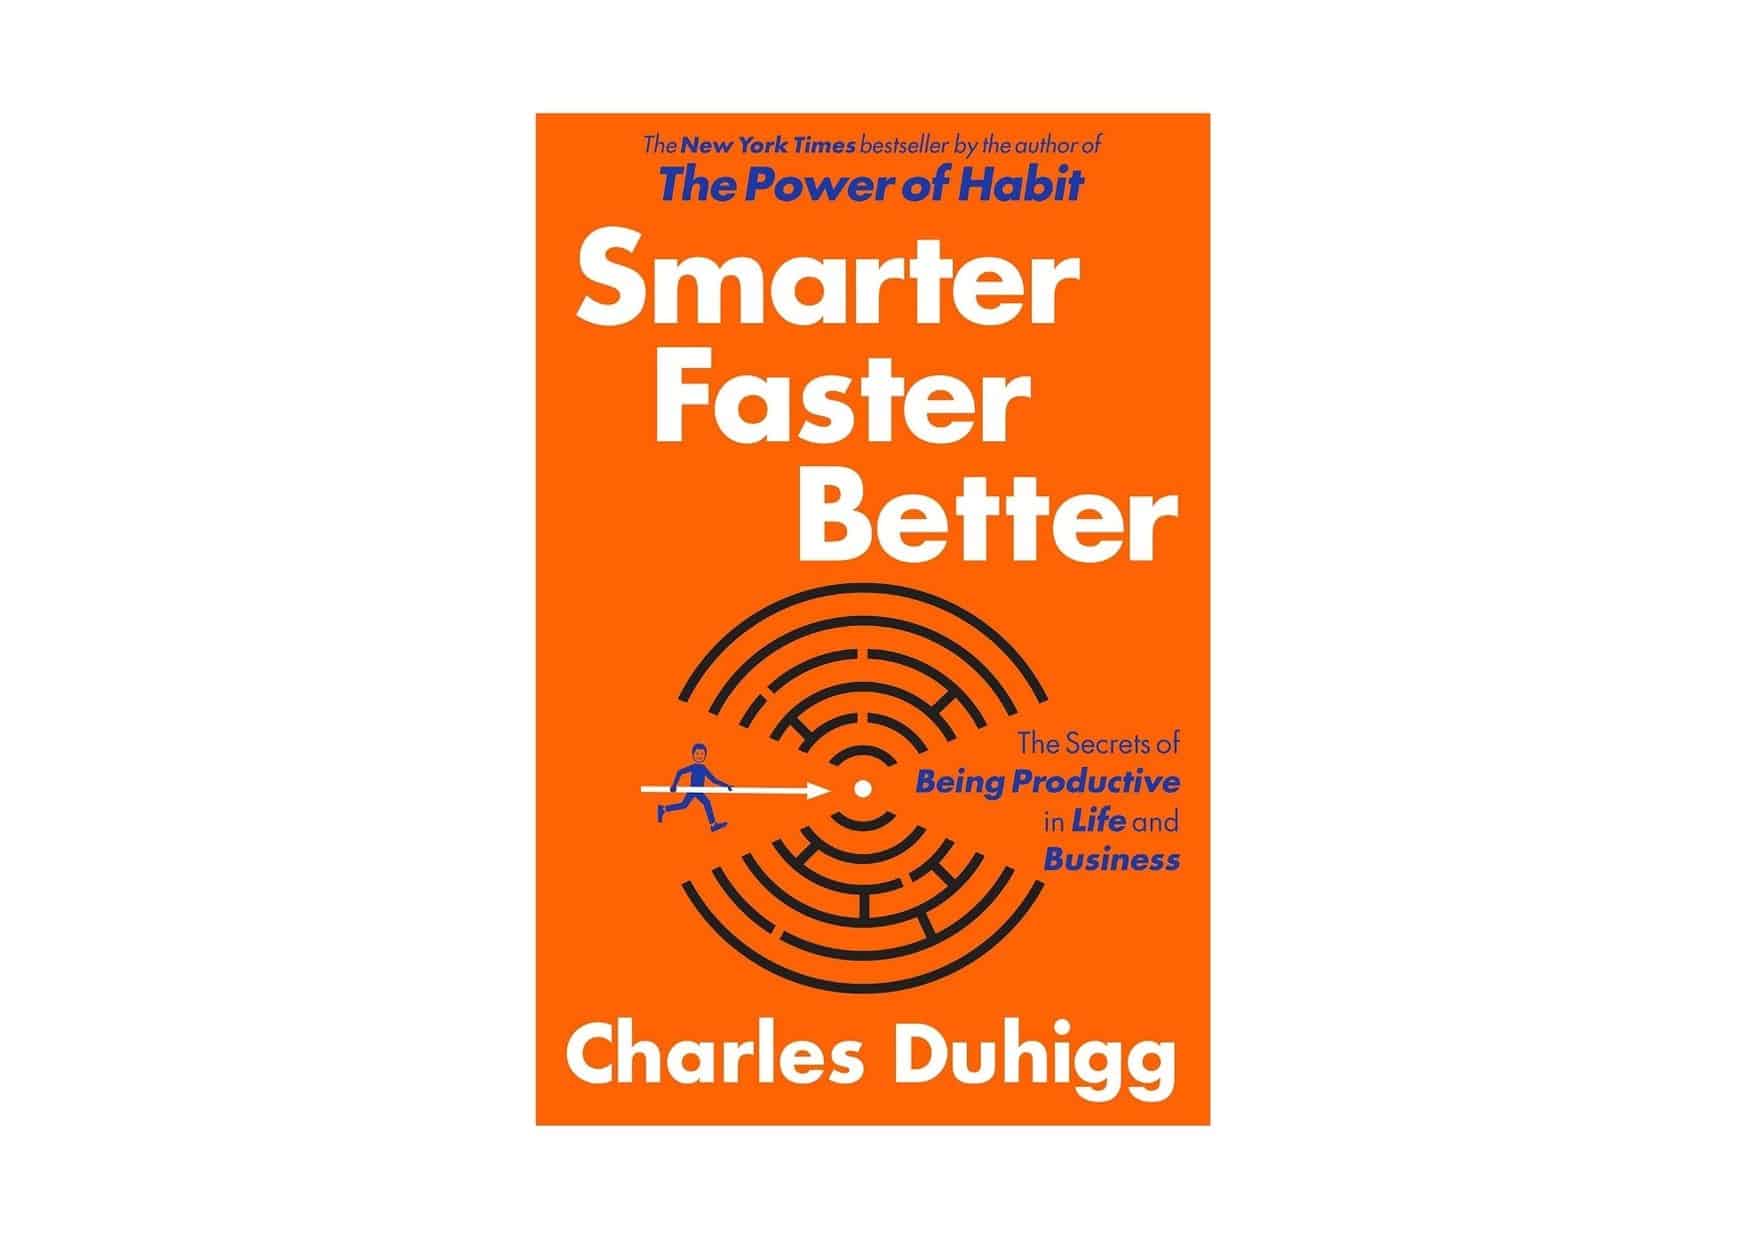 Smarter, Faster, Better by Charles Duhigg - Self Development Book